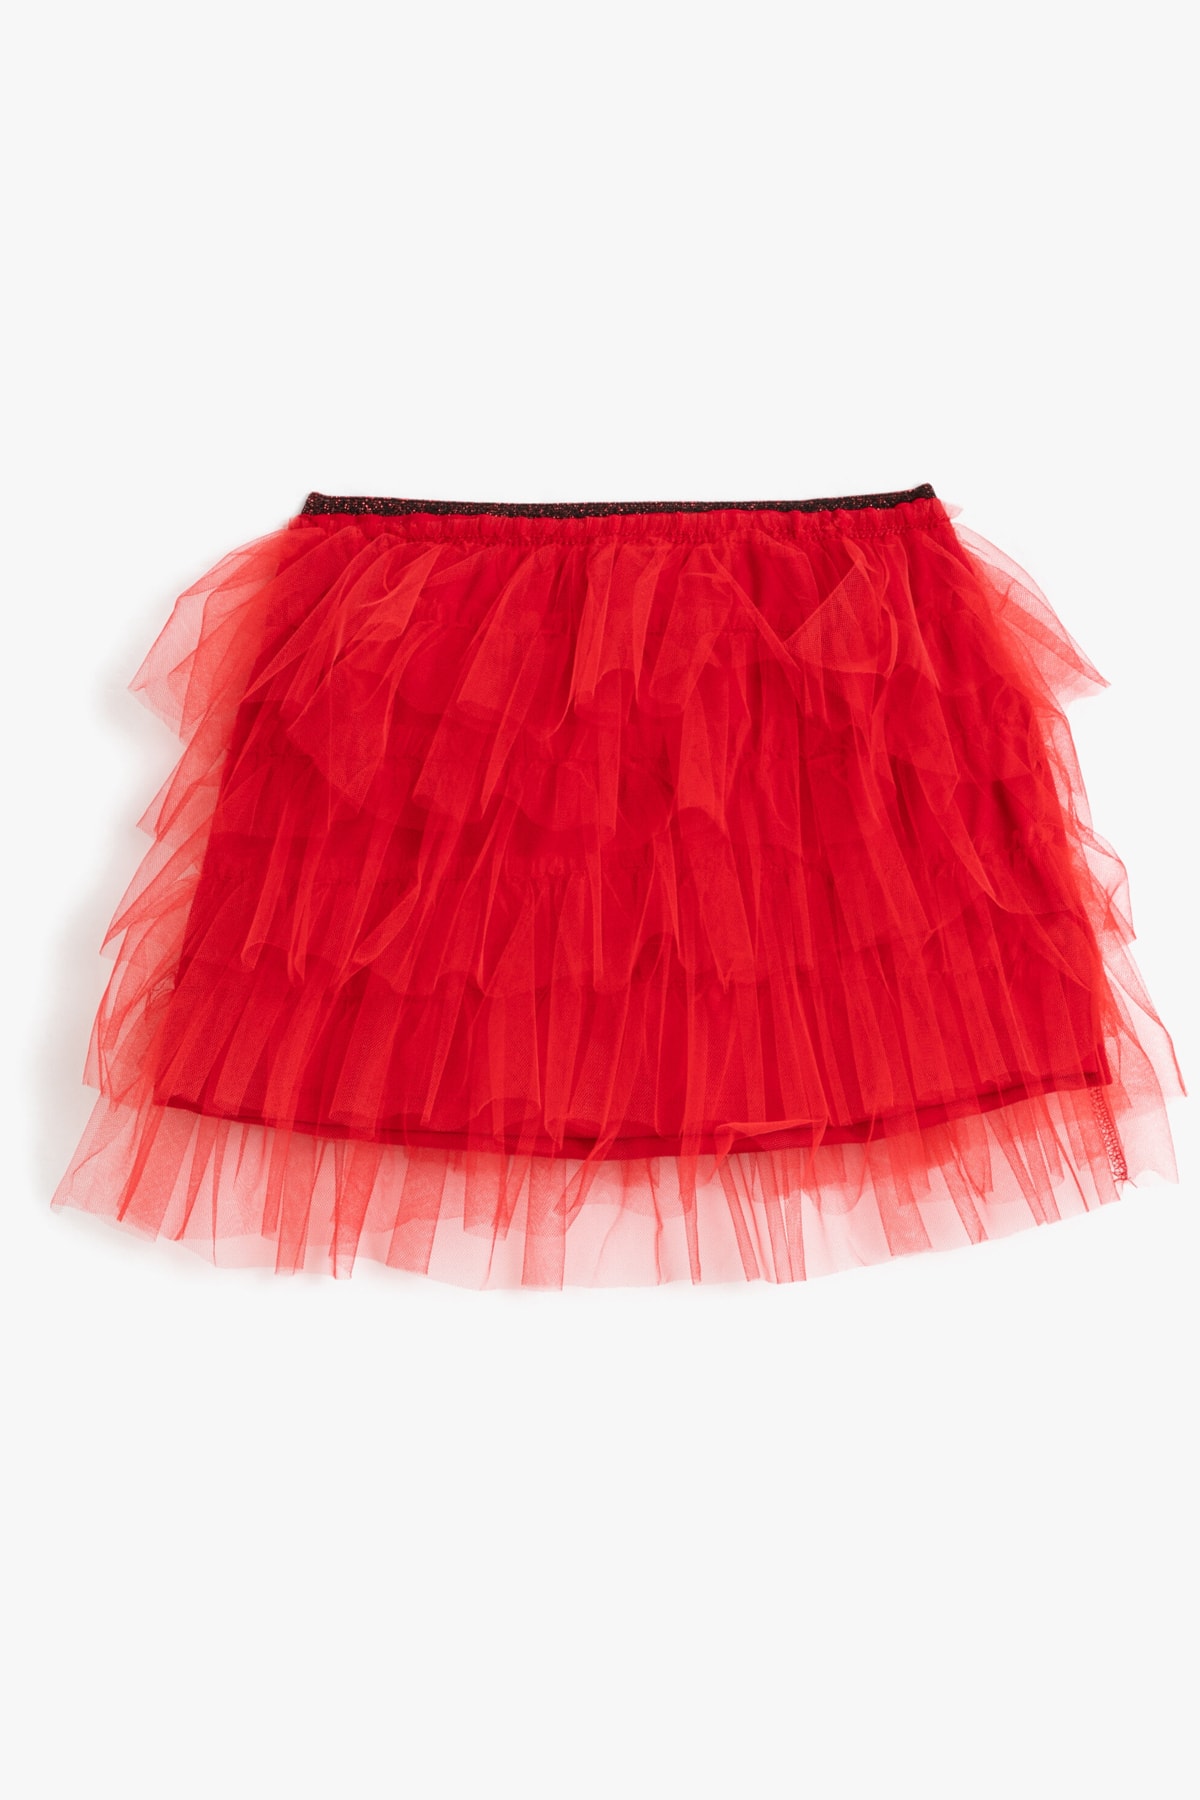 Koton Tutu Skirt With Elastic Waist, Layered Lined.